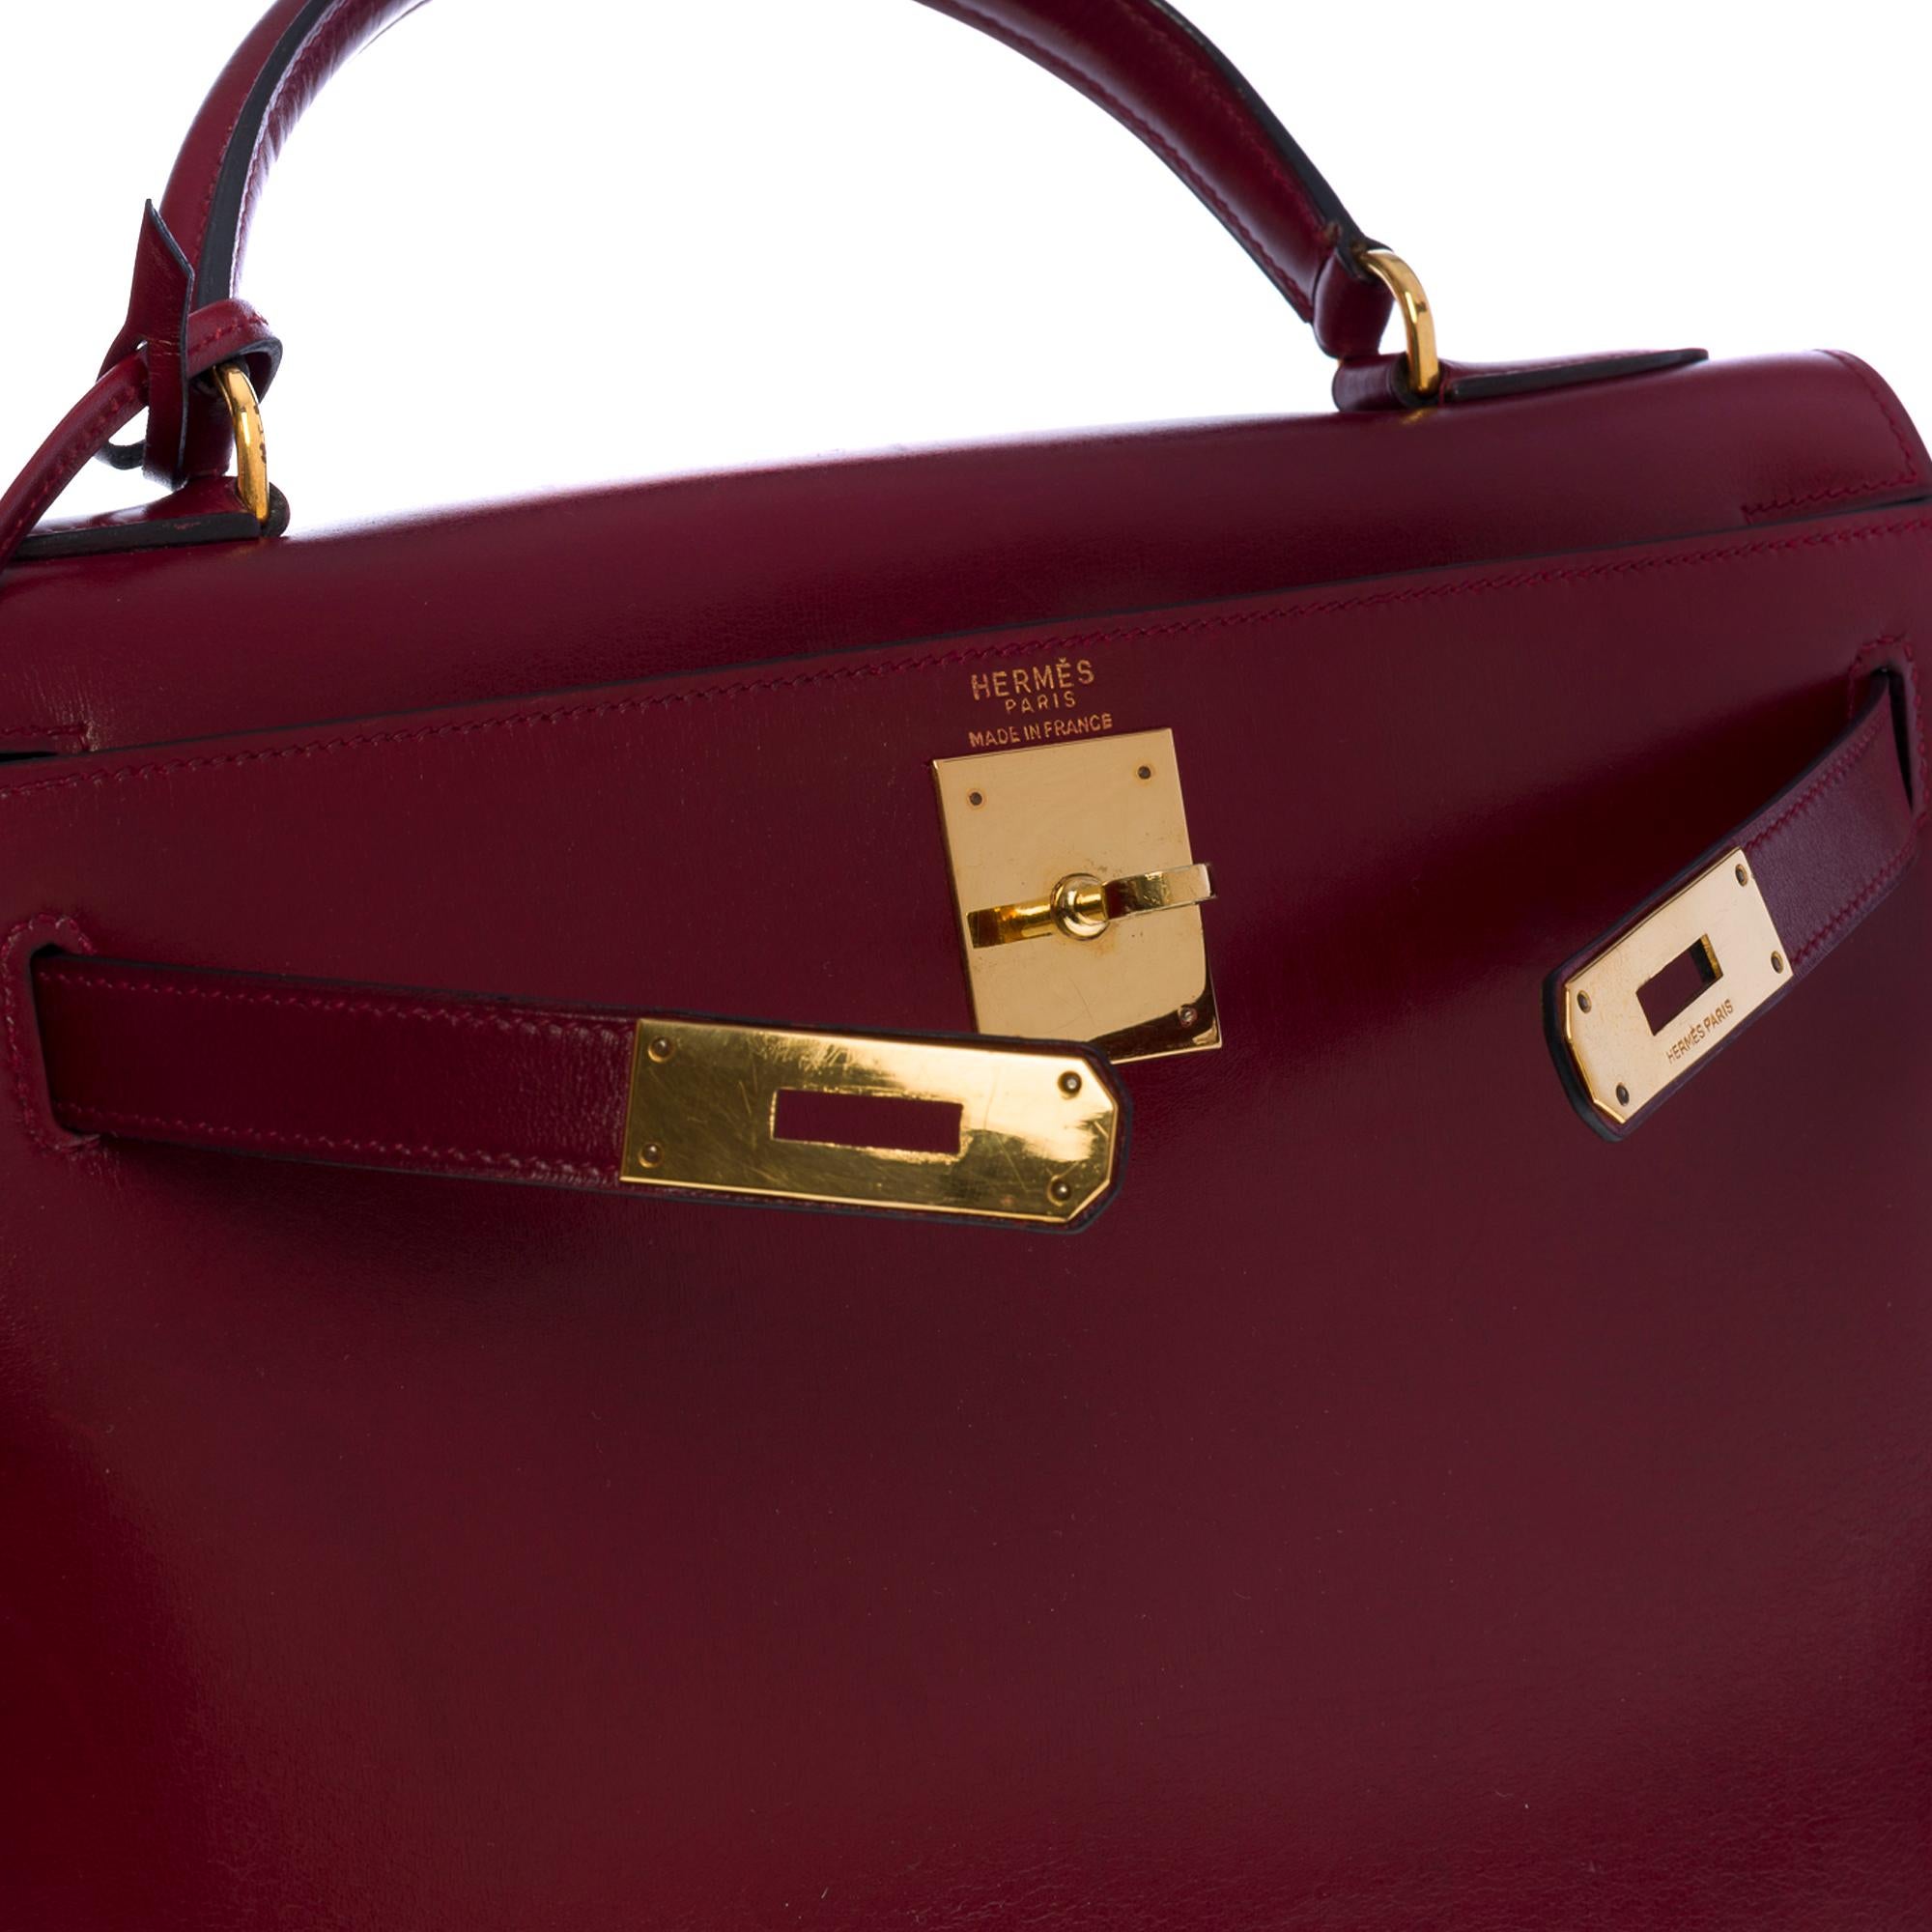 Women's Amazing Hermes Kelly 28 sellier handbag in Rouge H box calf leather, GHW